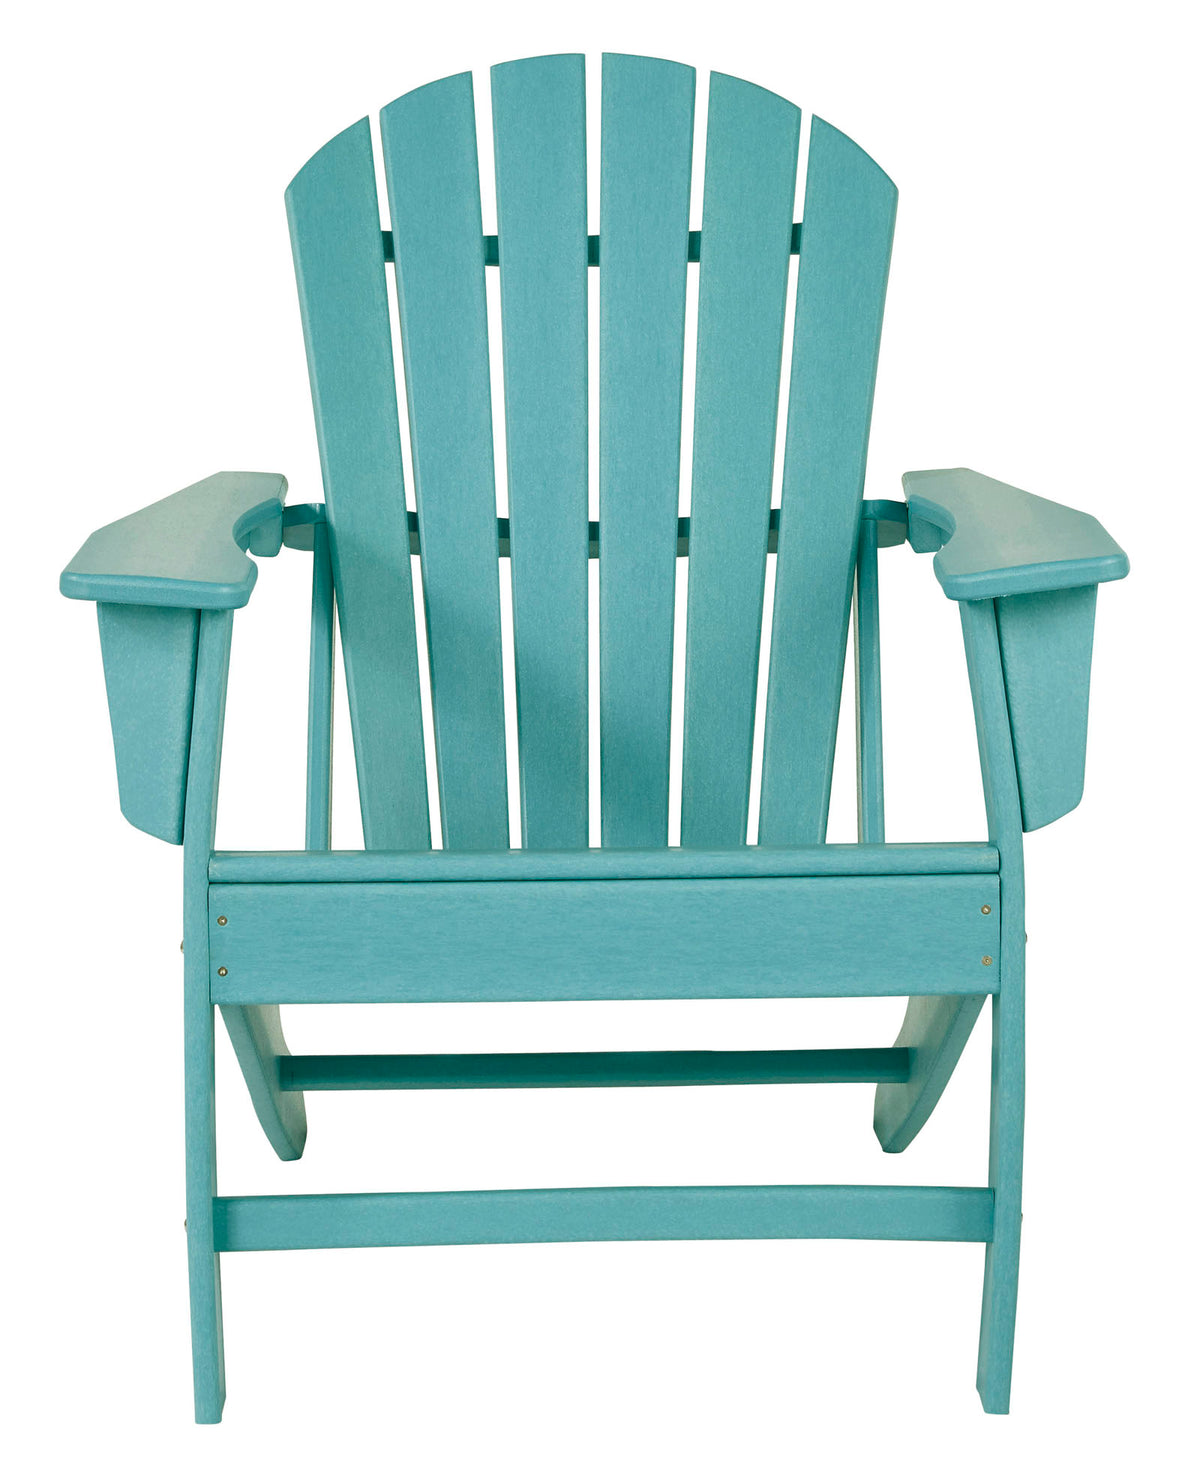 Sundown Treasure Teal Adirondack Chair - MJM Furniture